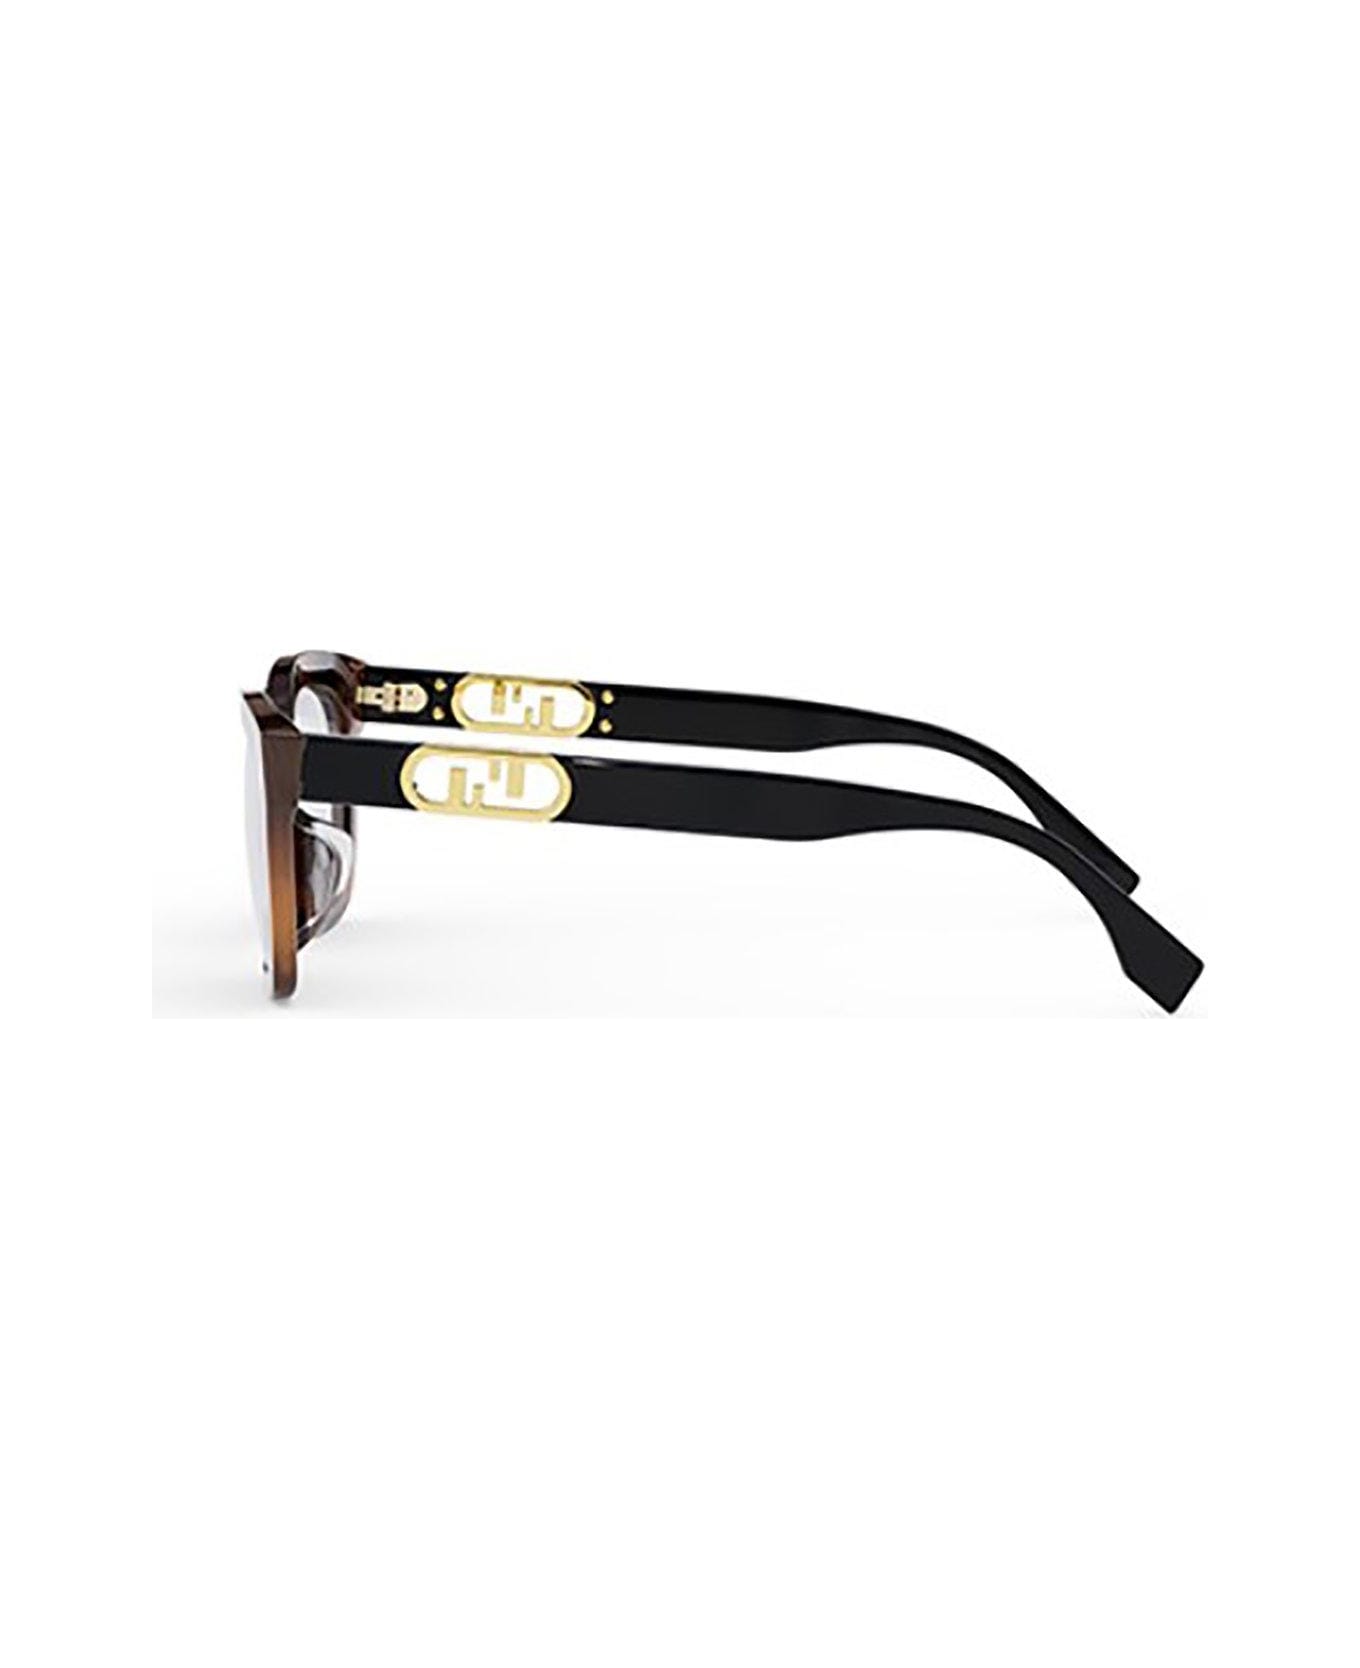 Fendi Eyewear Oval Frame Glasses - 053